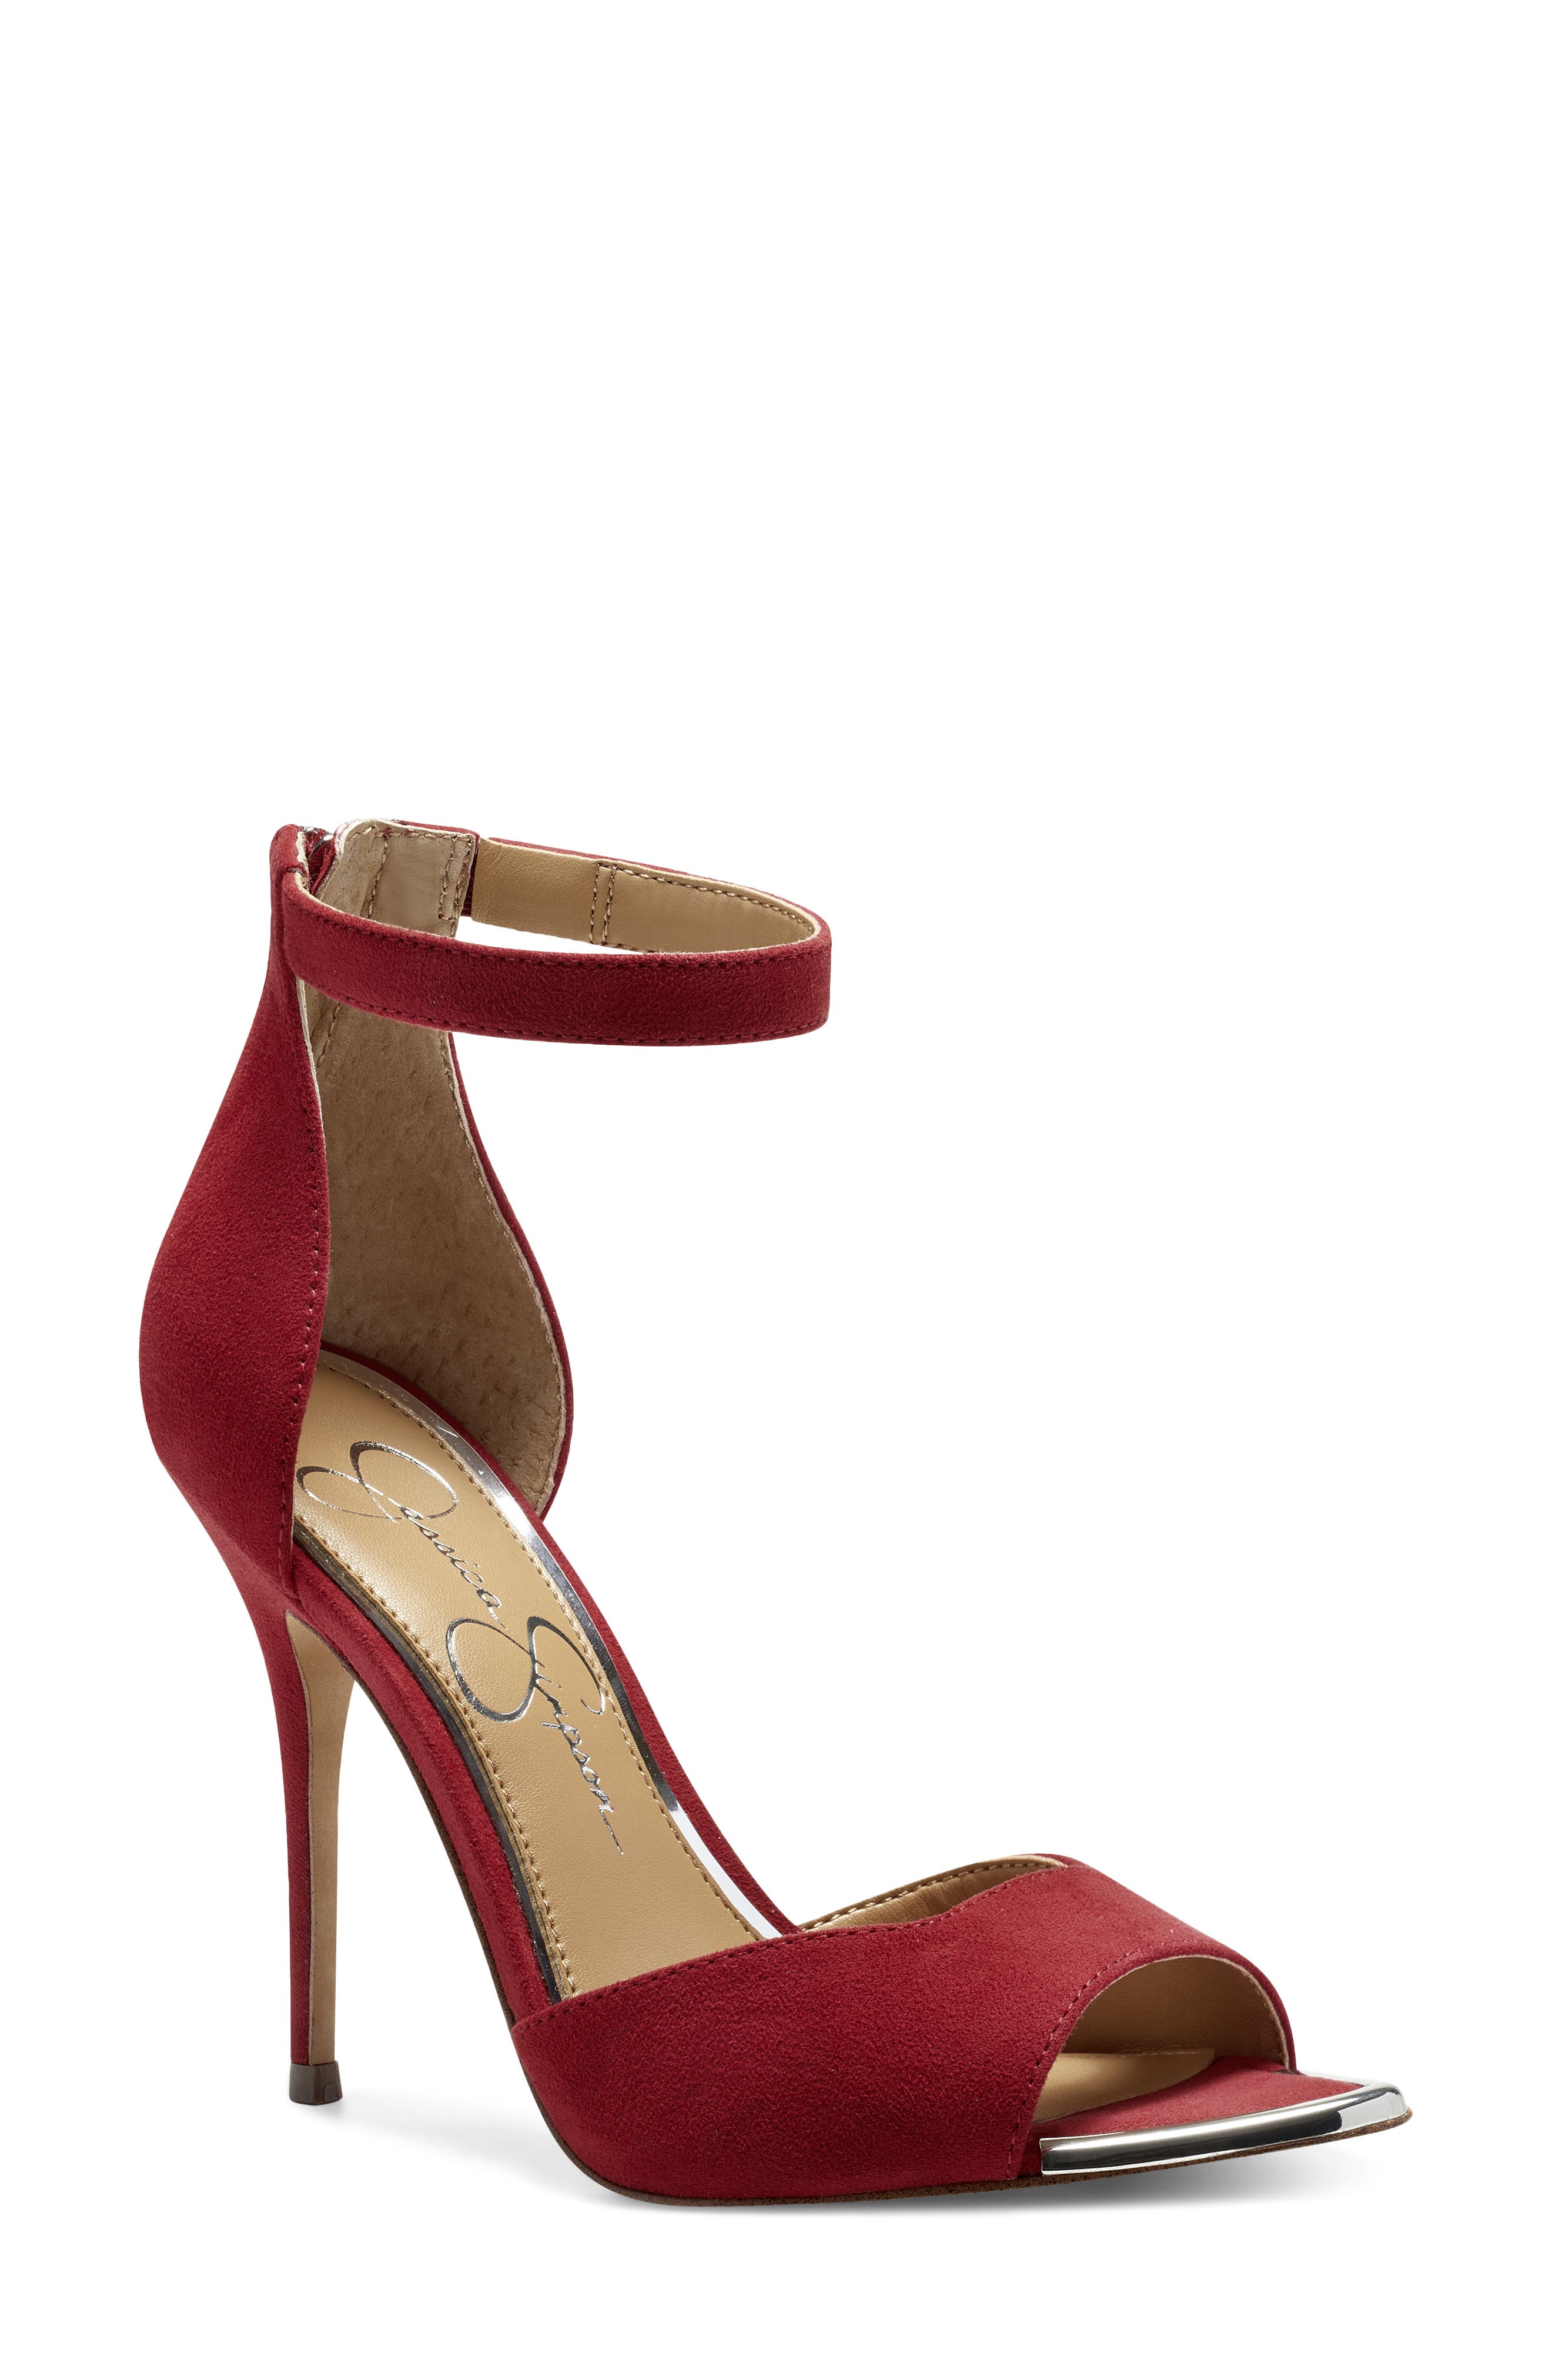 nordstrom shoes red heels